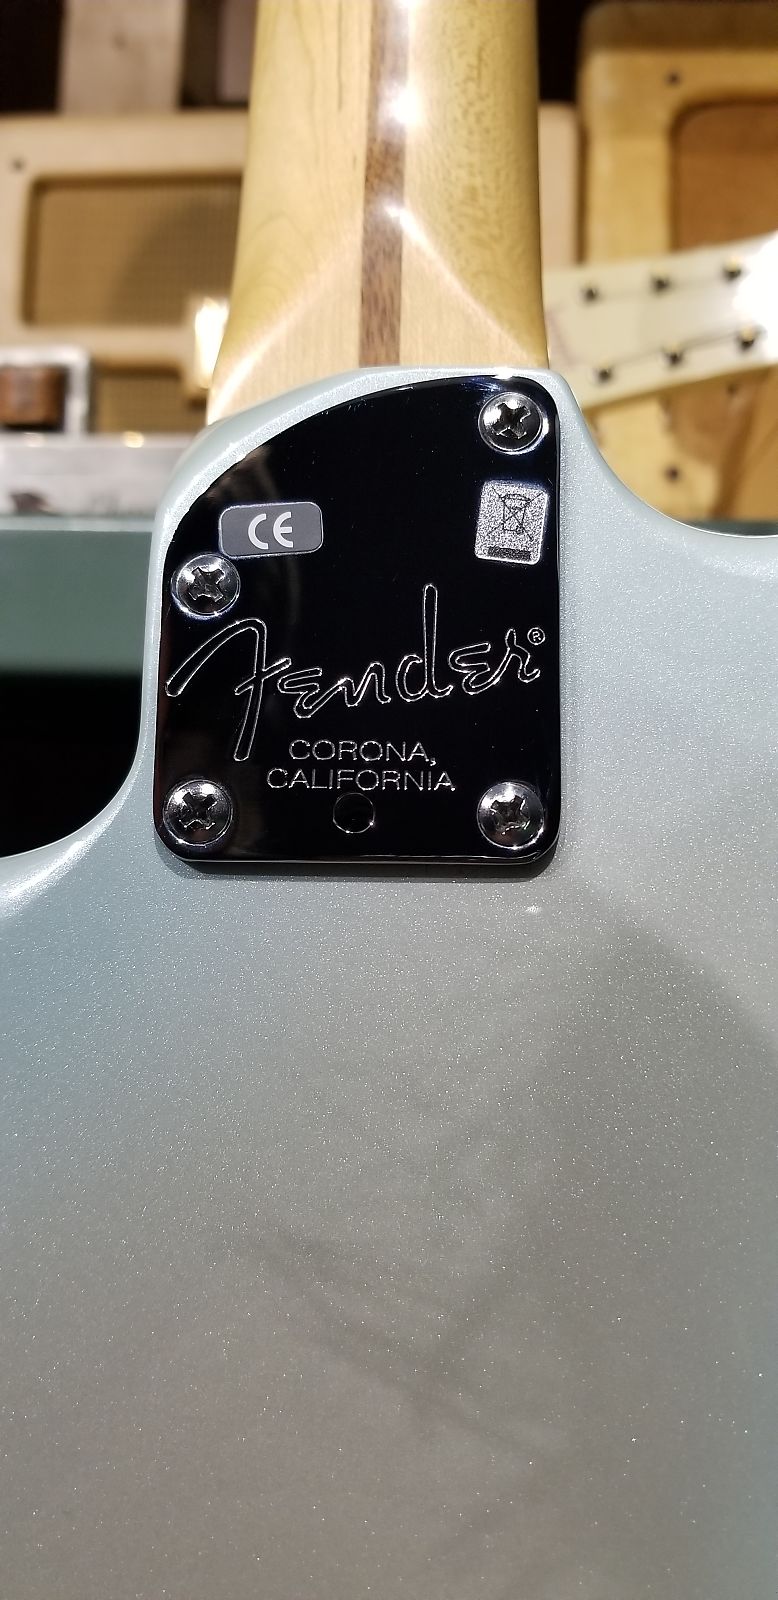 Dealer Event American Deluxe Stratocaster 2-Tone Silver Blue